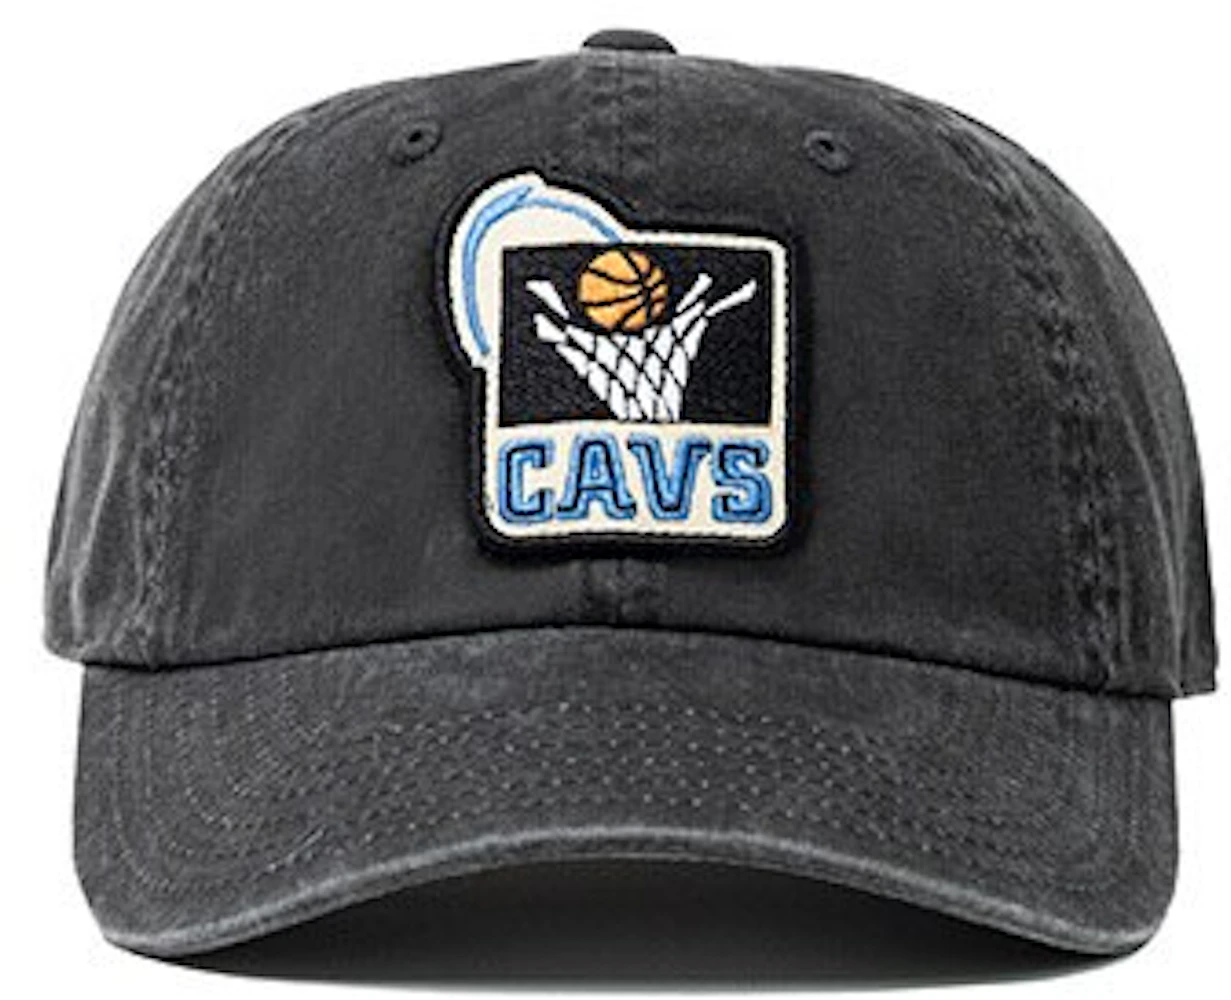 Cleveland Cavaliers x New Era 90s Snapback Hat Black/Powder Blue - US